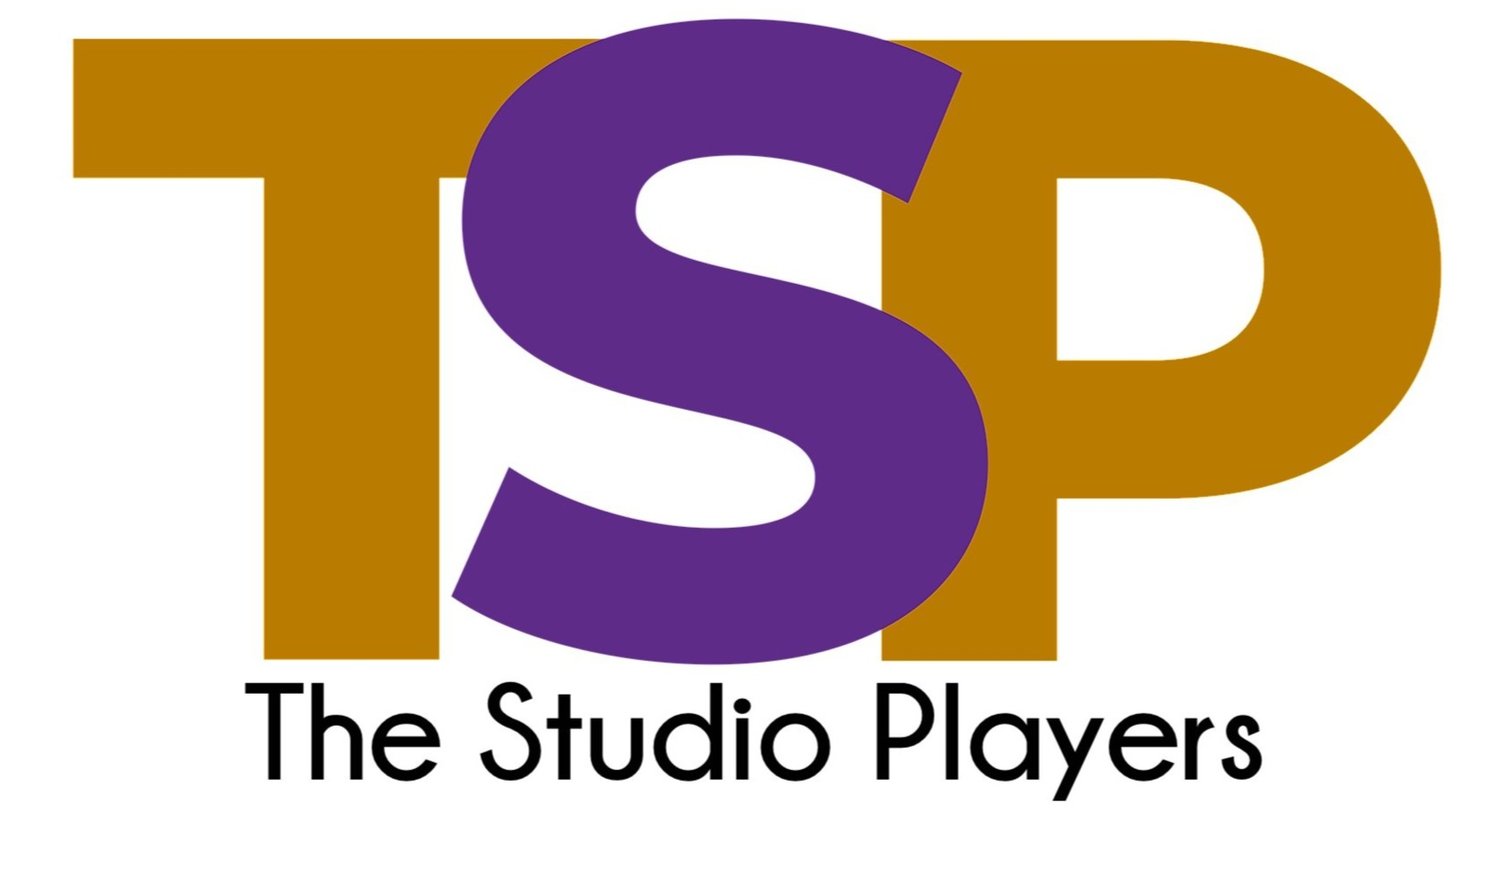 The Studio Players